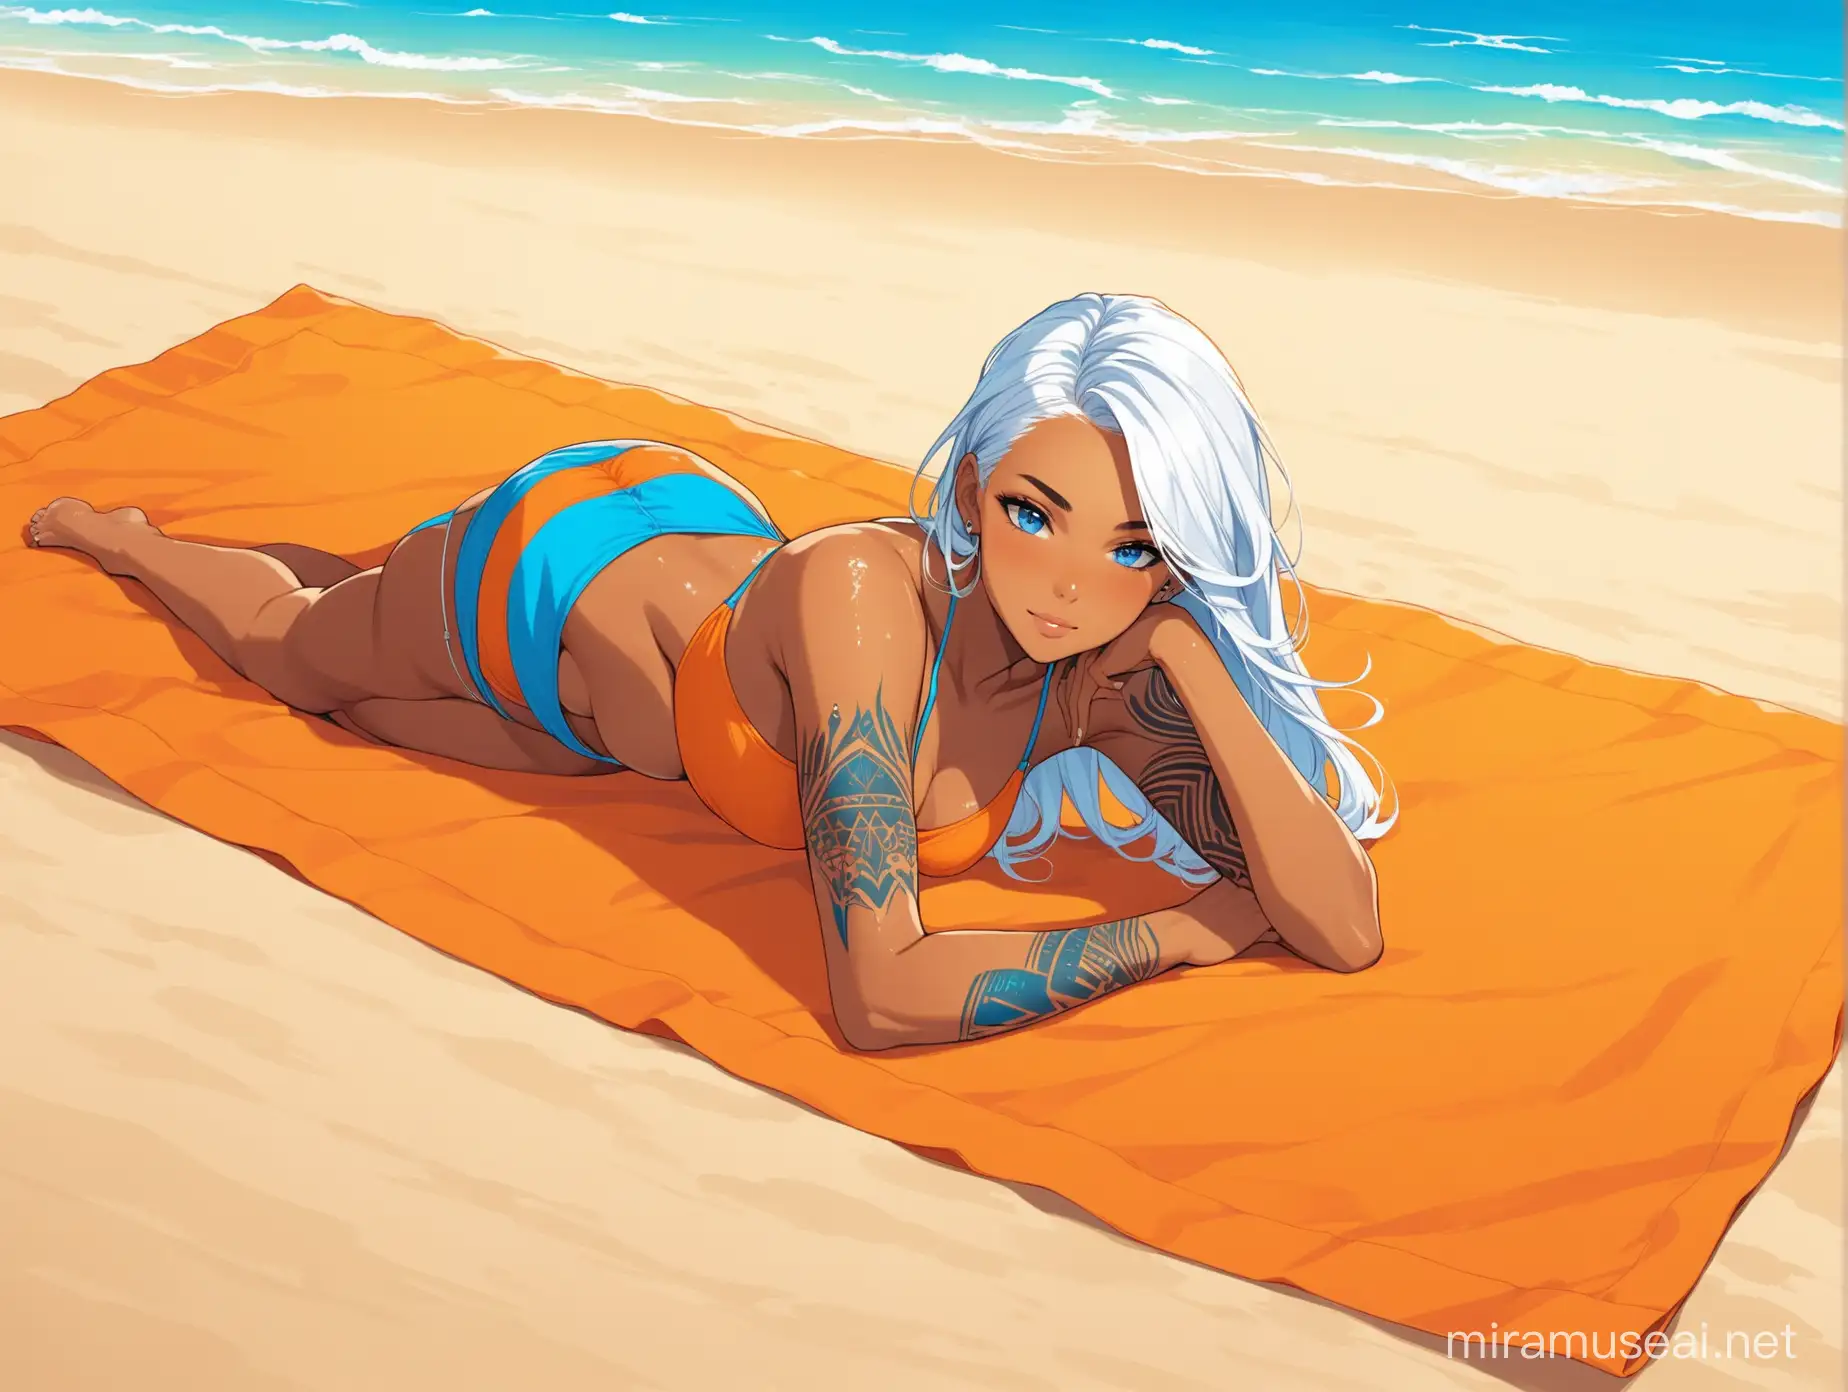 Tanned Woman Relaxing on Beach Towel in Blue and Orange Bikini